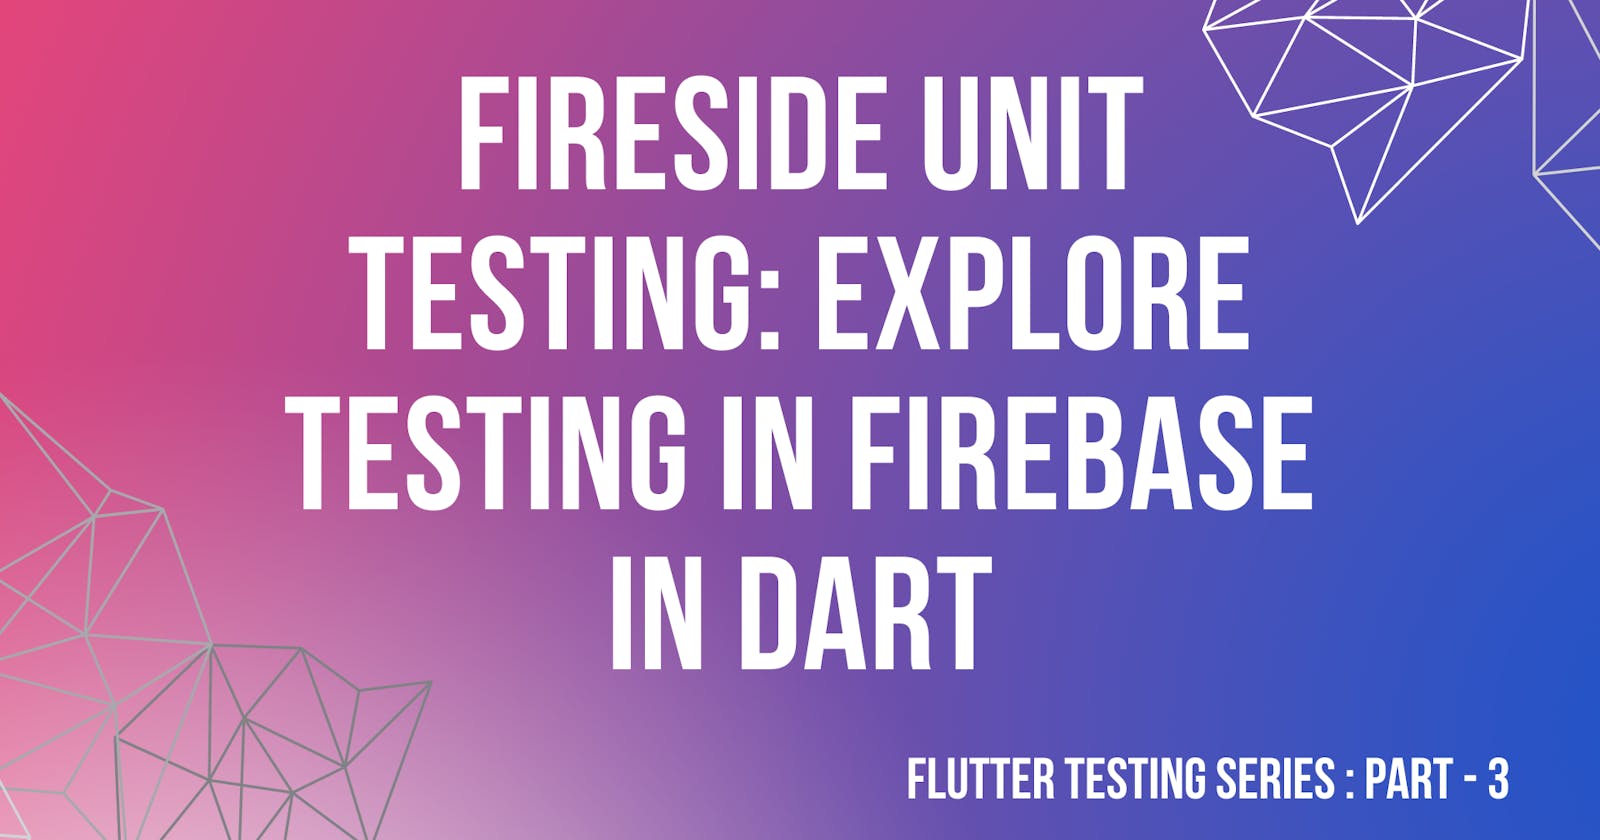 Fireside Unit Testing: Explore testing in Firebase in Dart